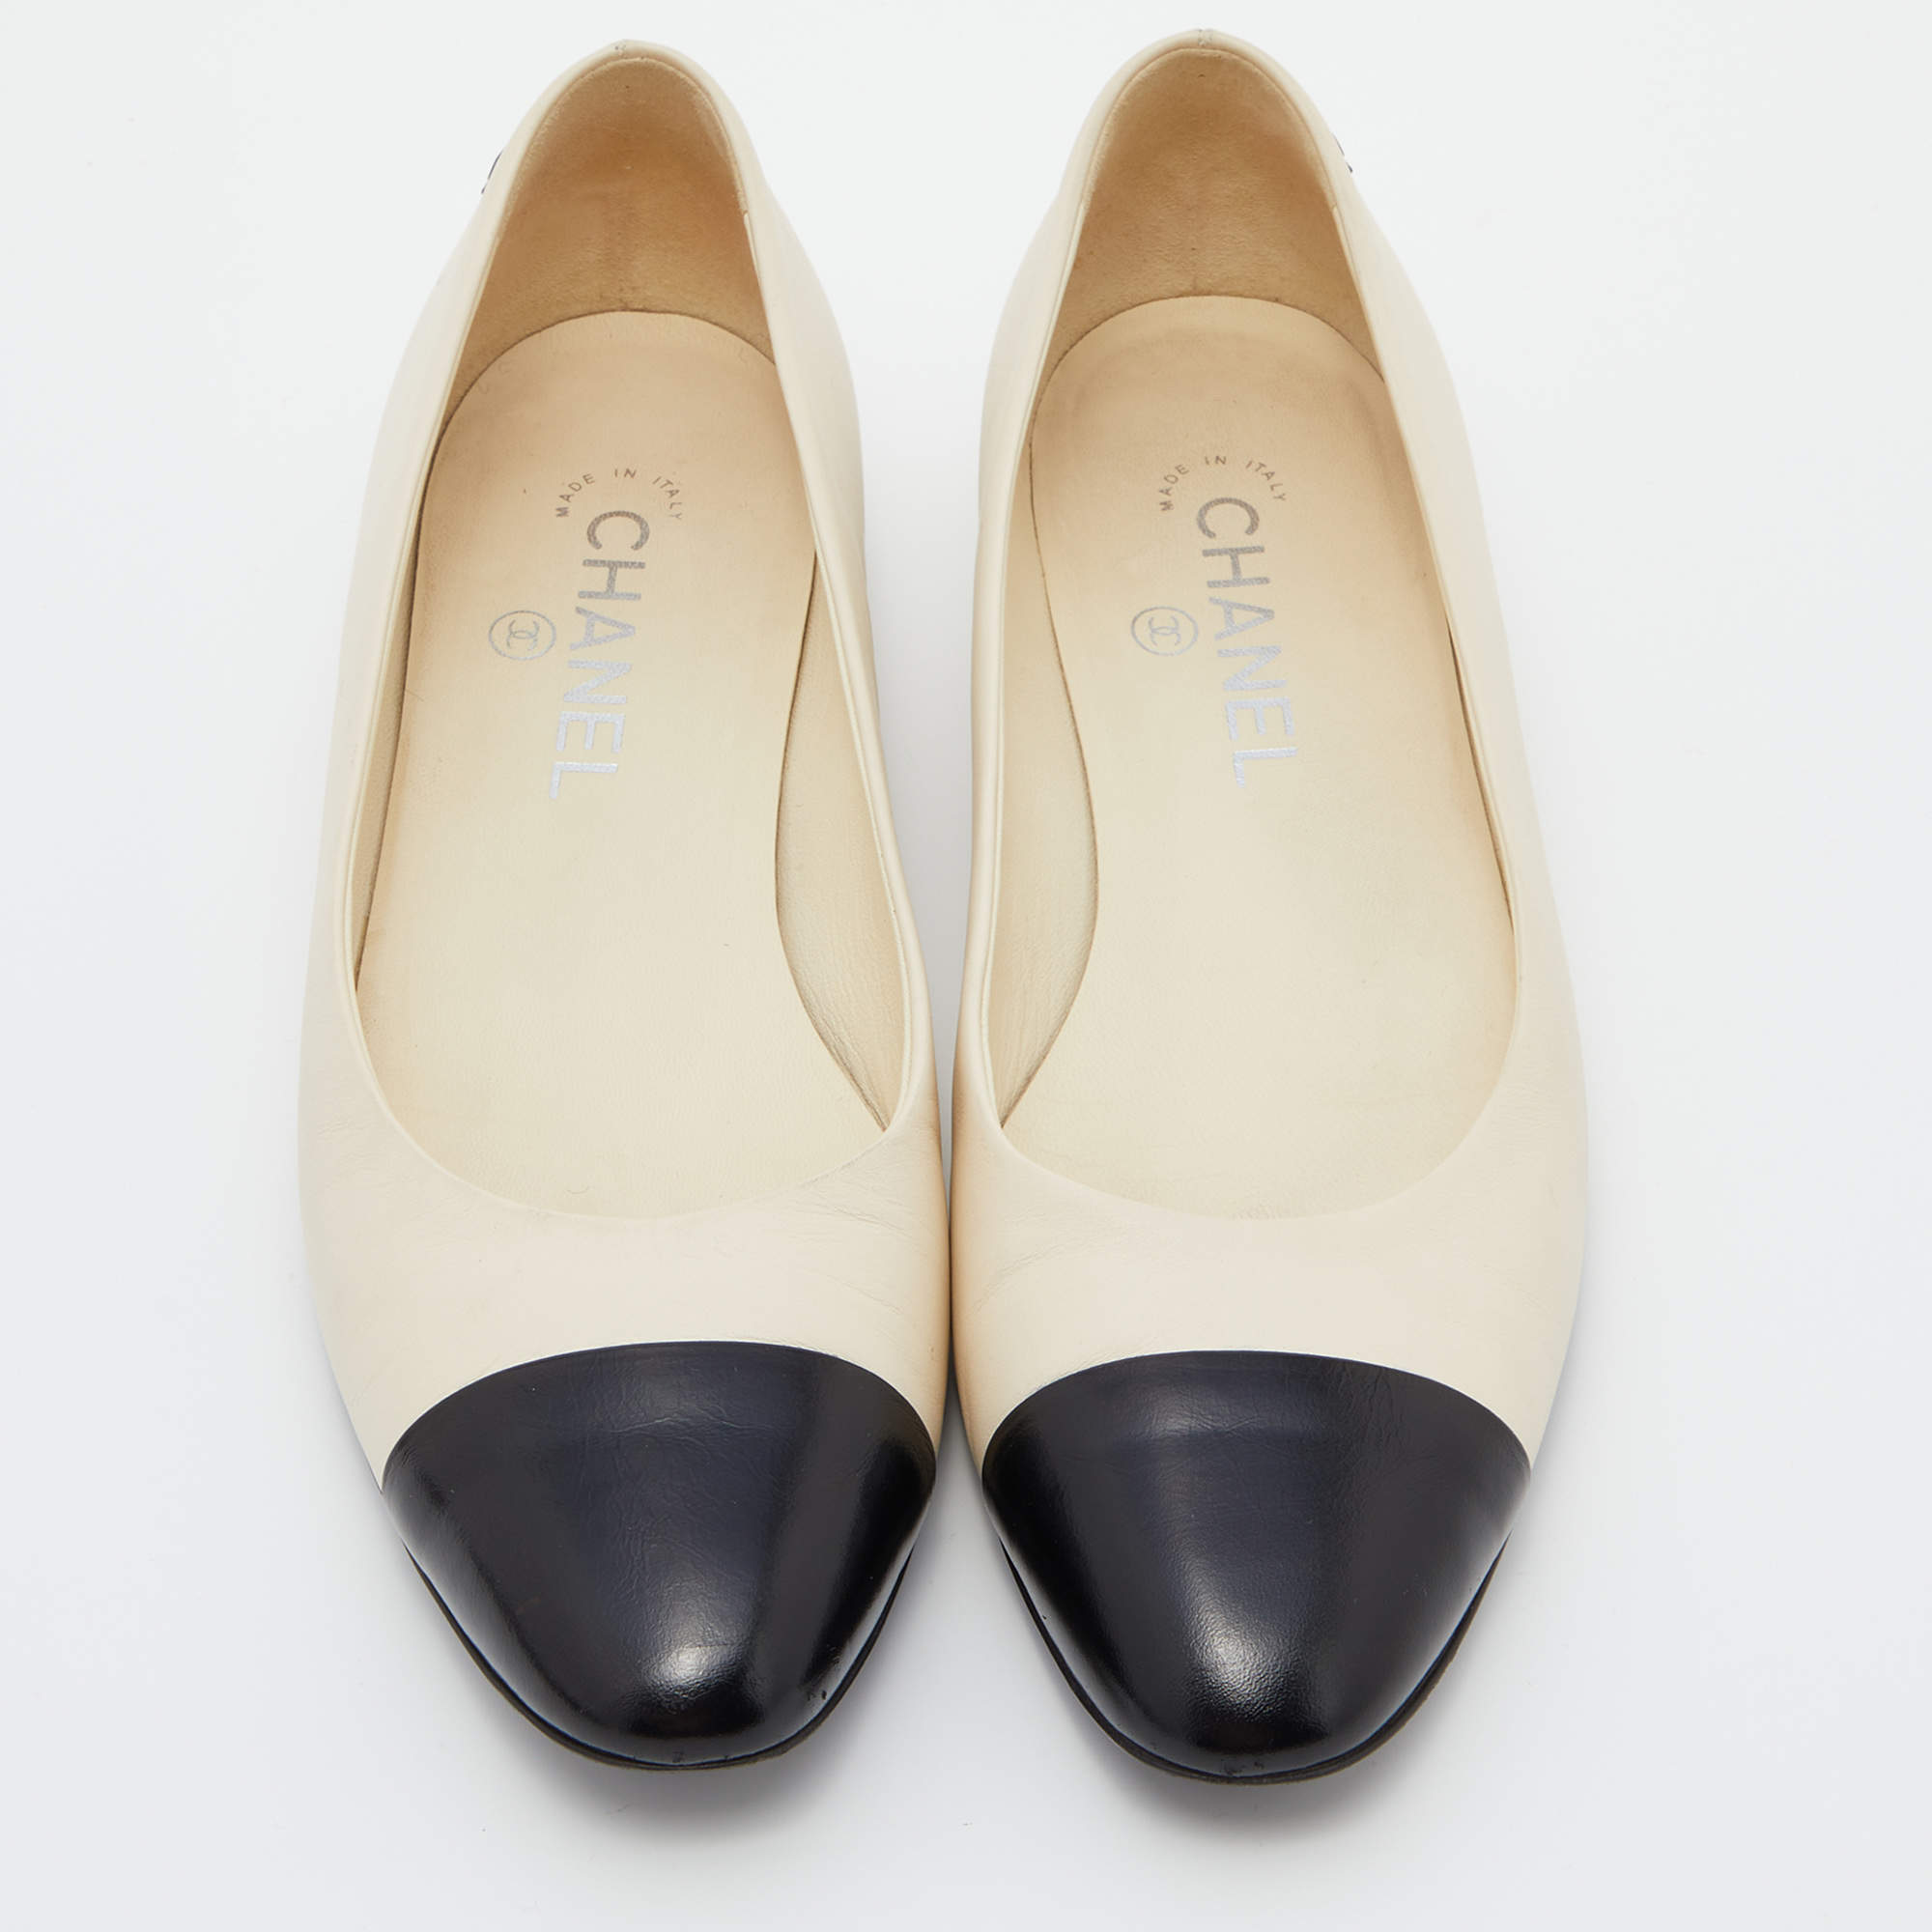 Chanel Cream/Black Leather CC Ballet Flats Size 39 Chanel